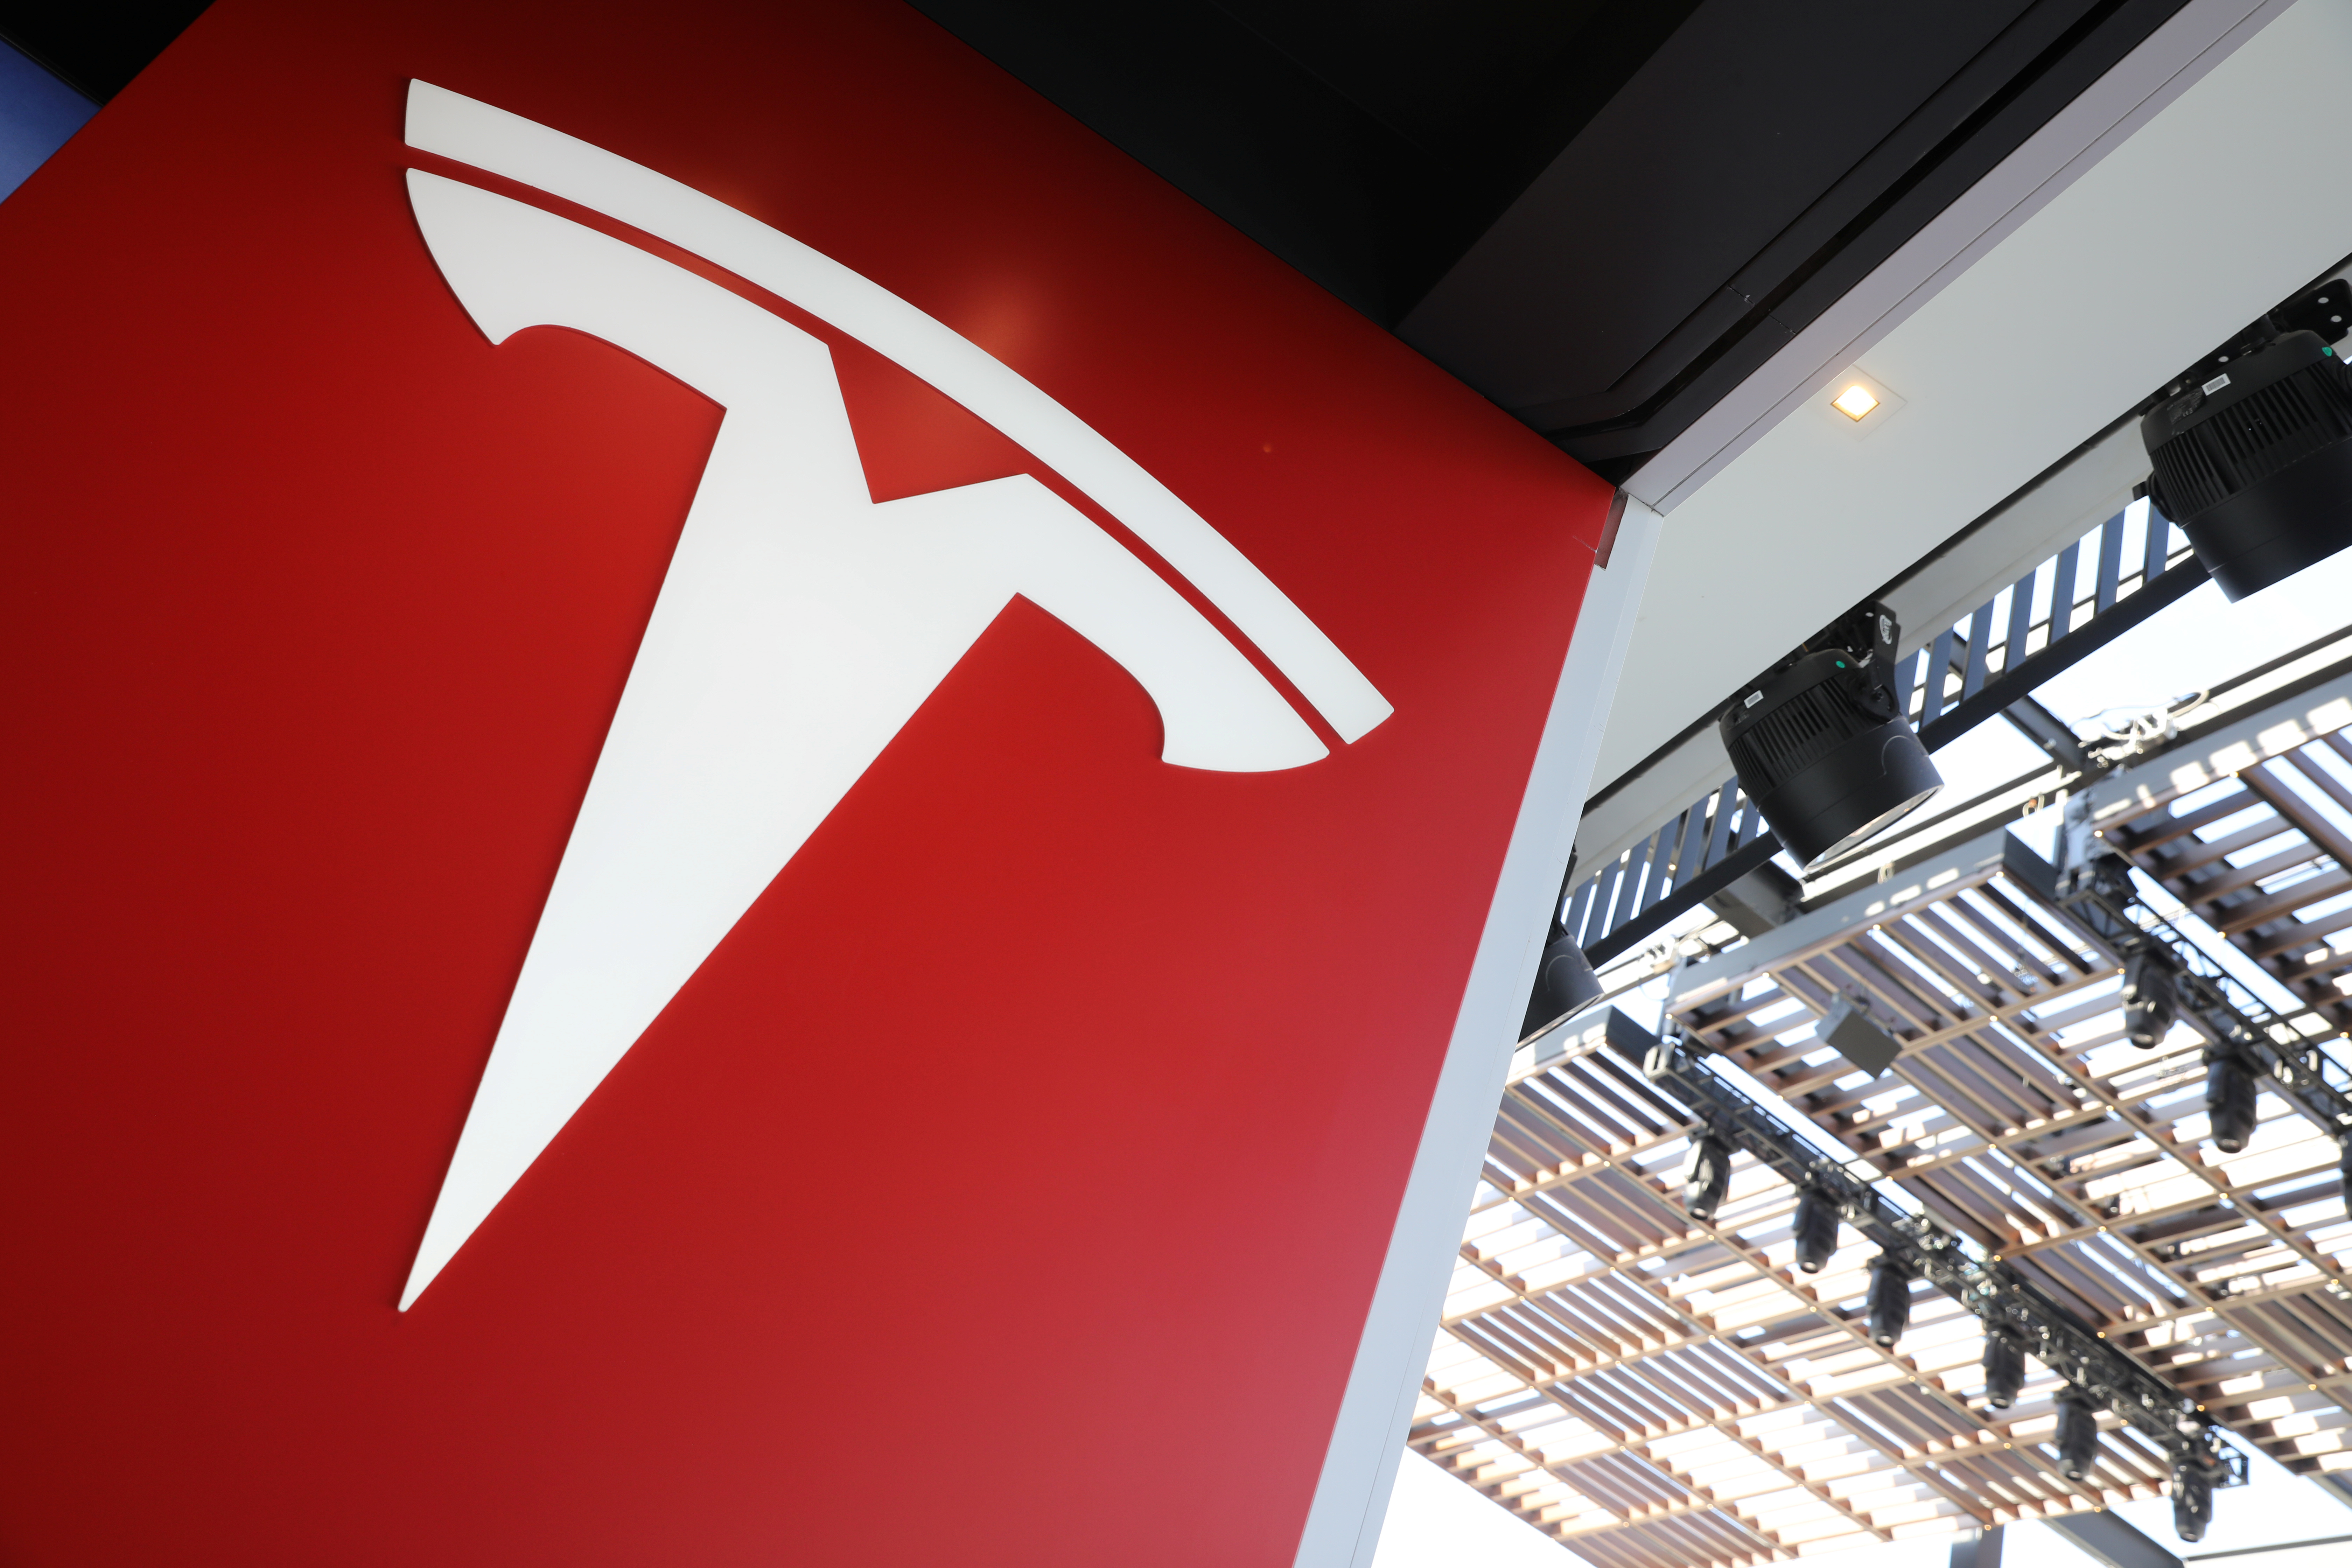 The Tesla logo appears in Los Angeles